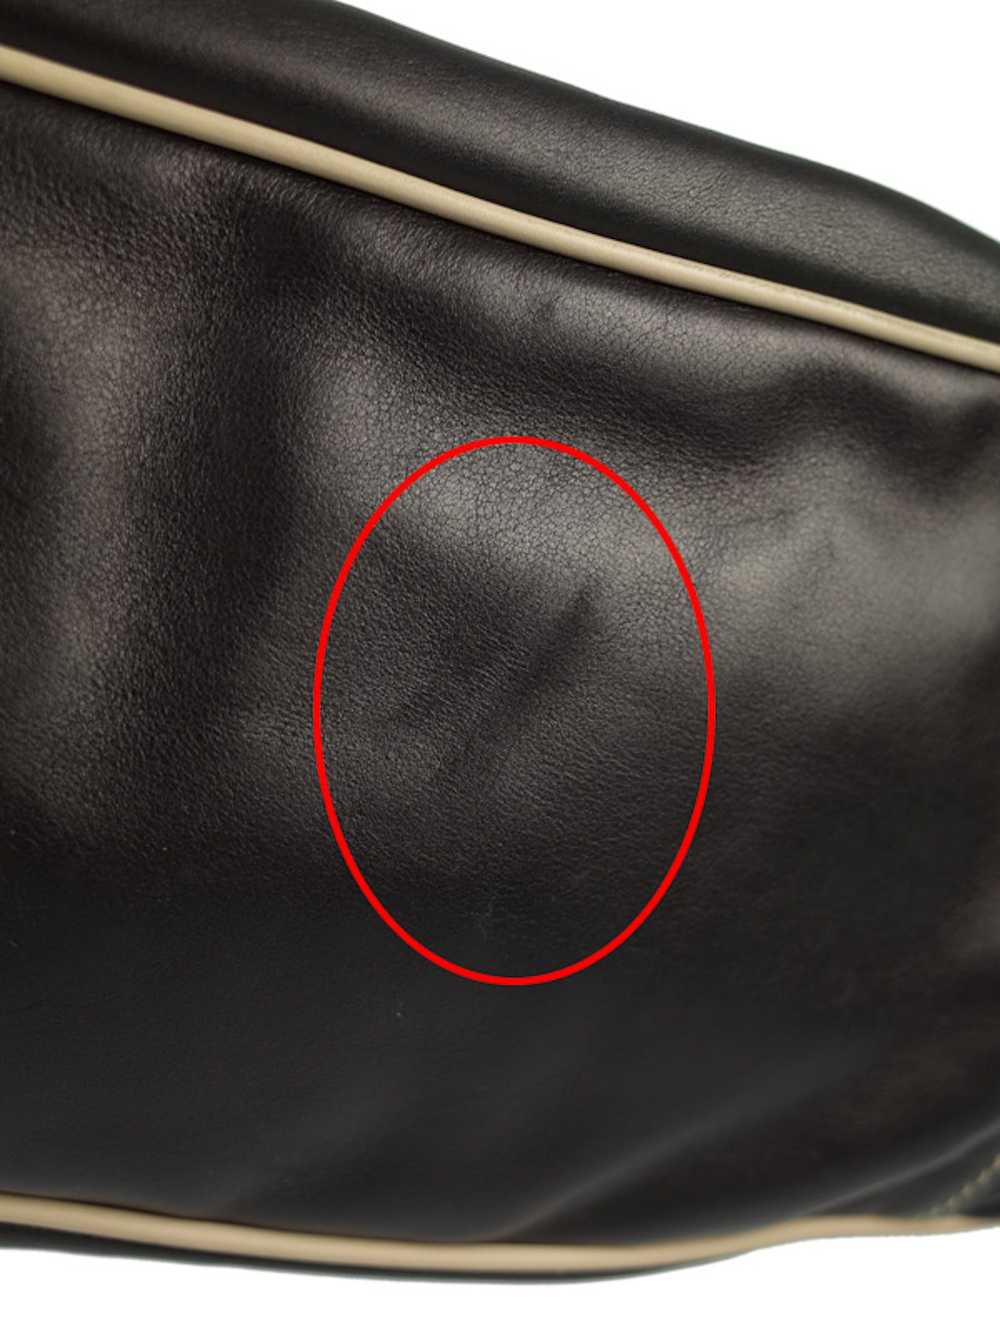 Prada Prada Leather Shoulder Bag Black - image 8